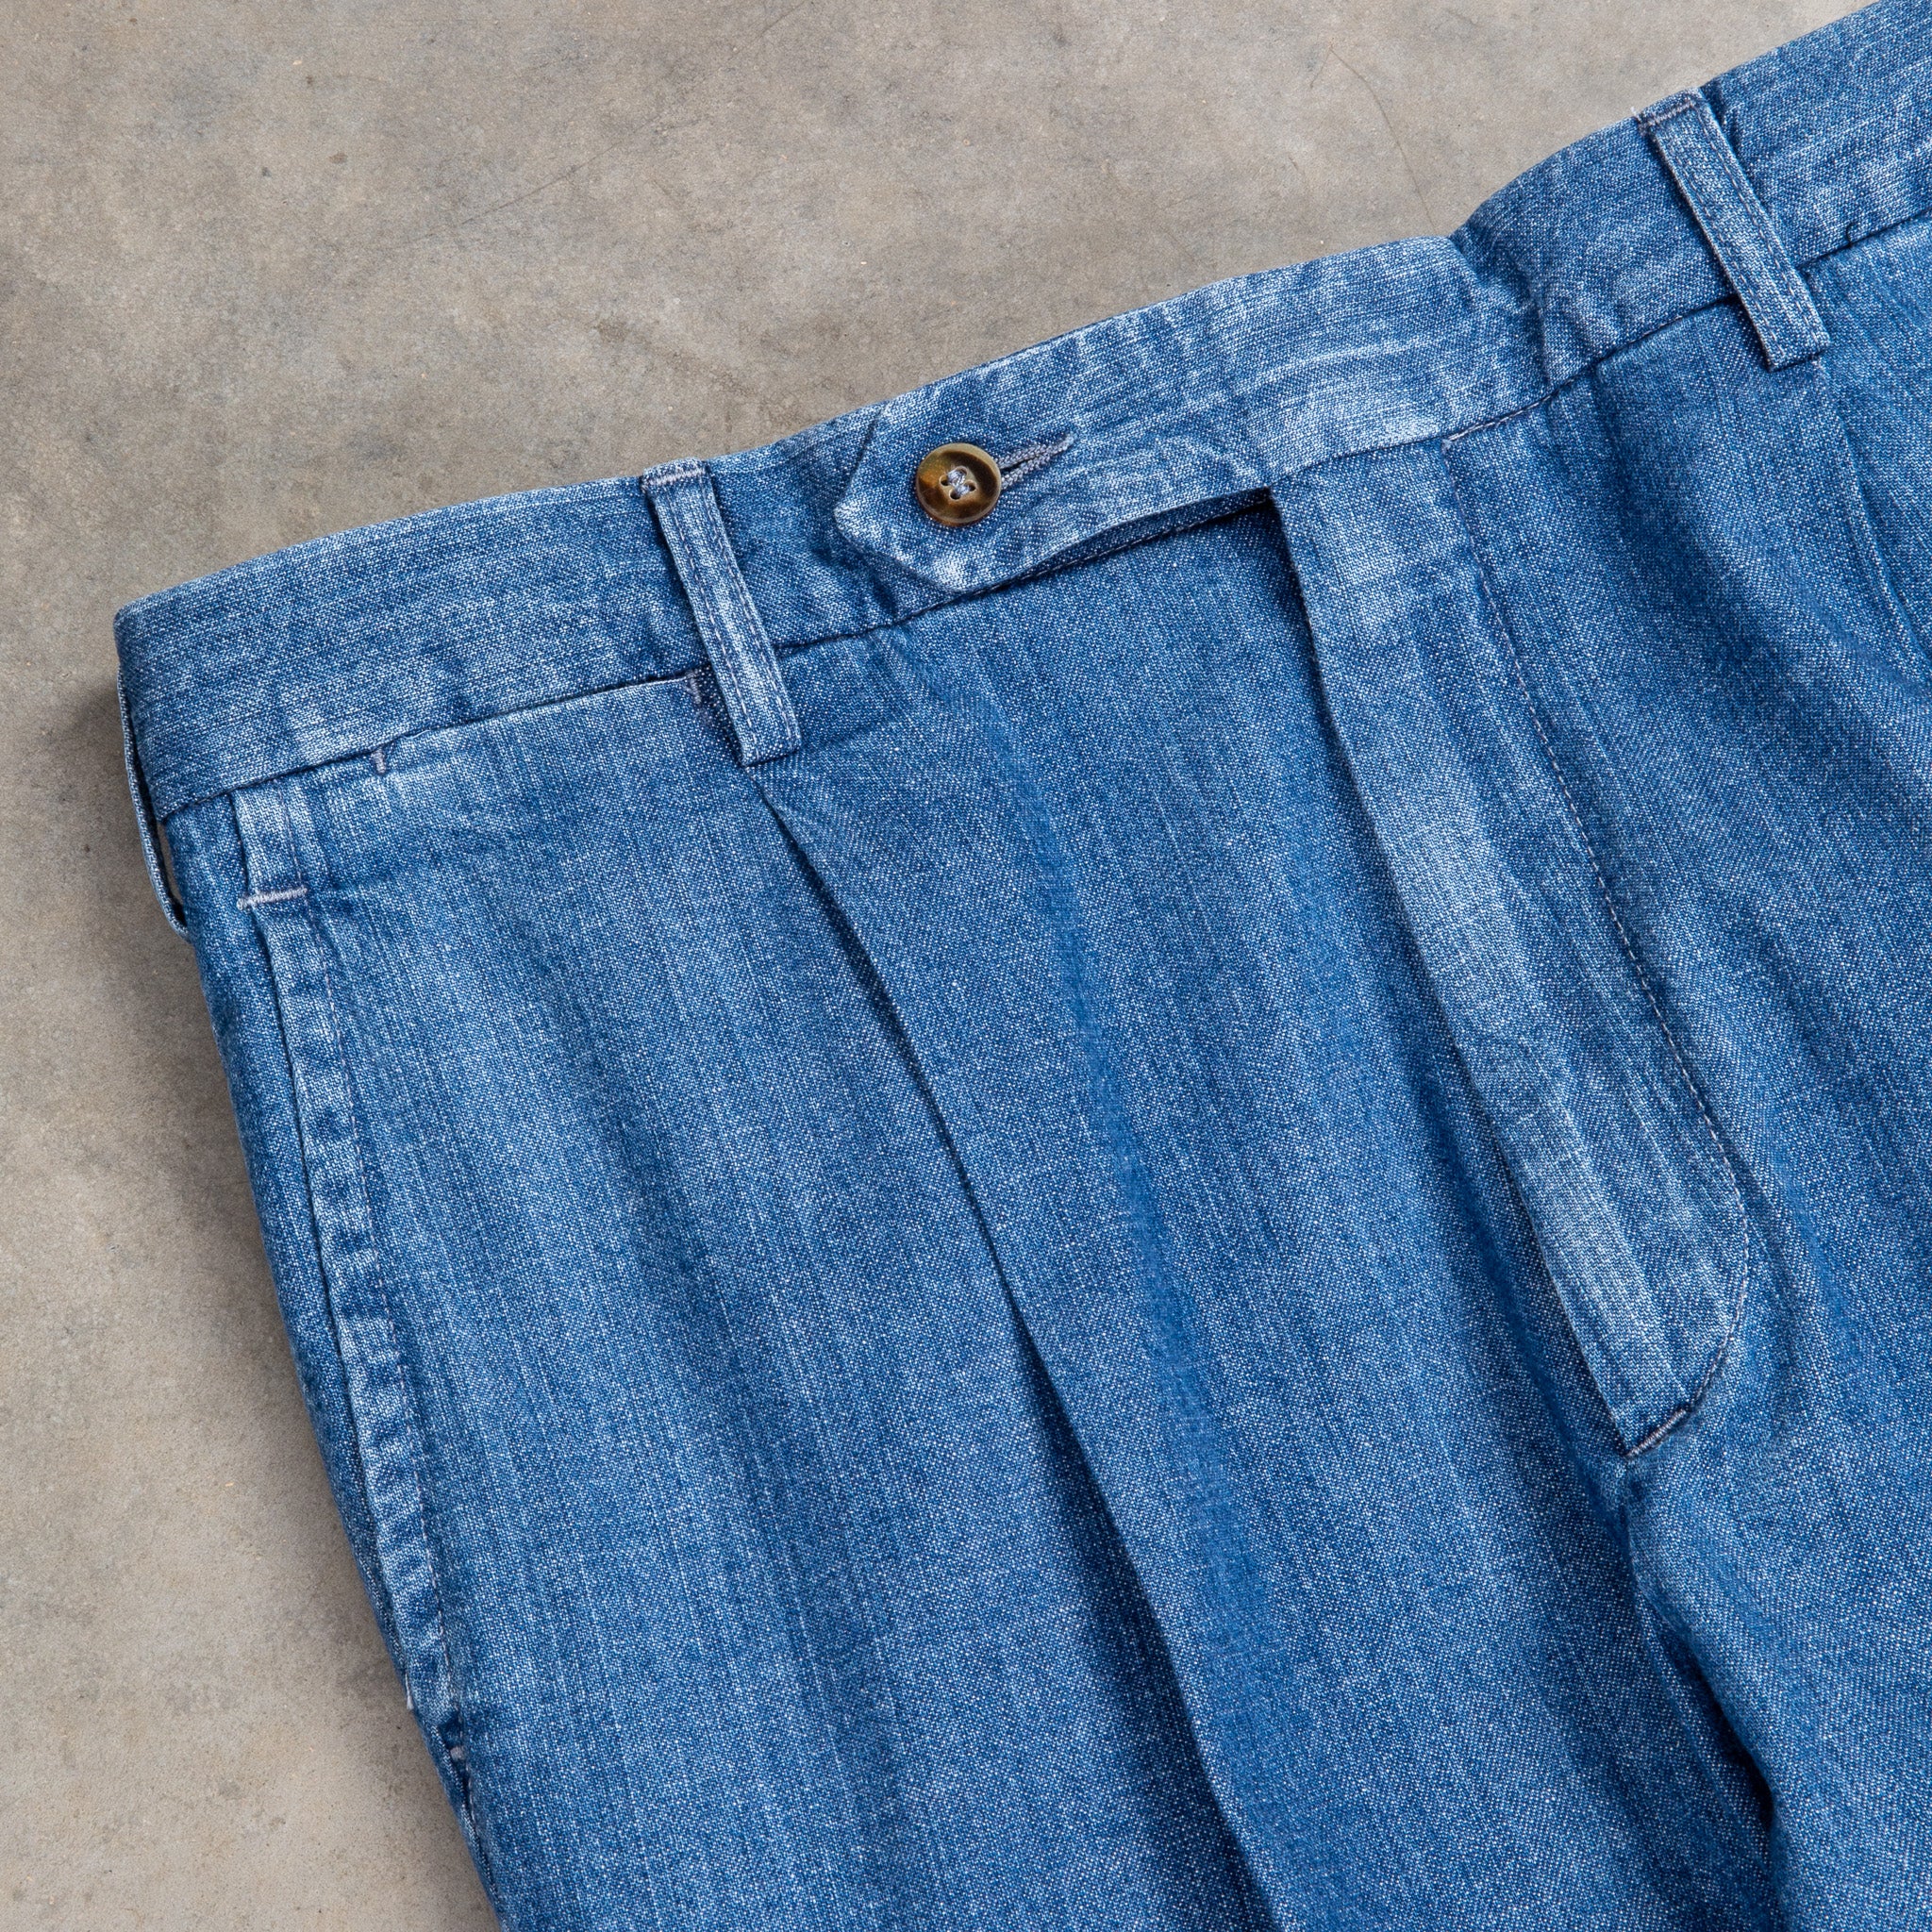 Denim trouser in Chambray Blue wash